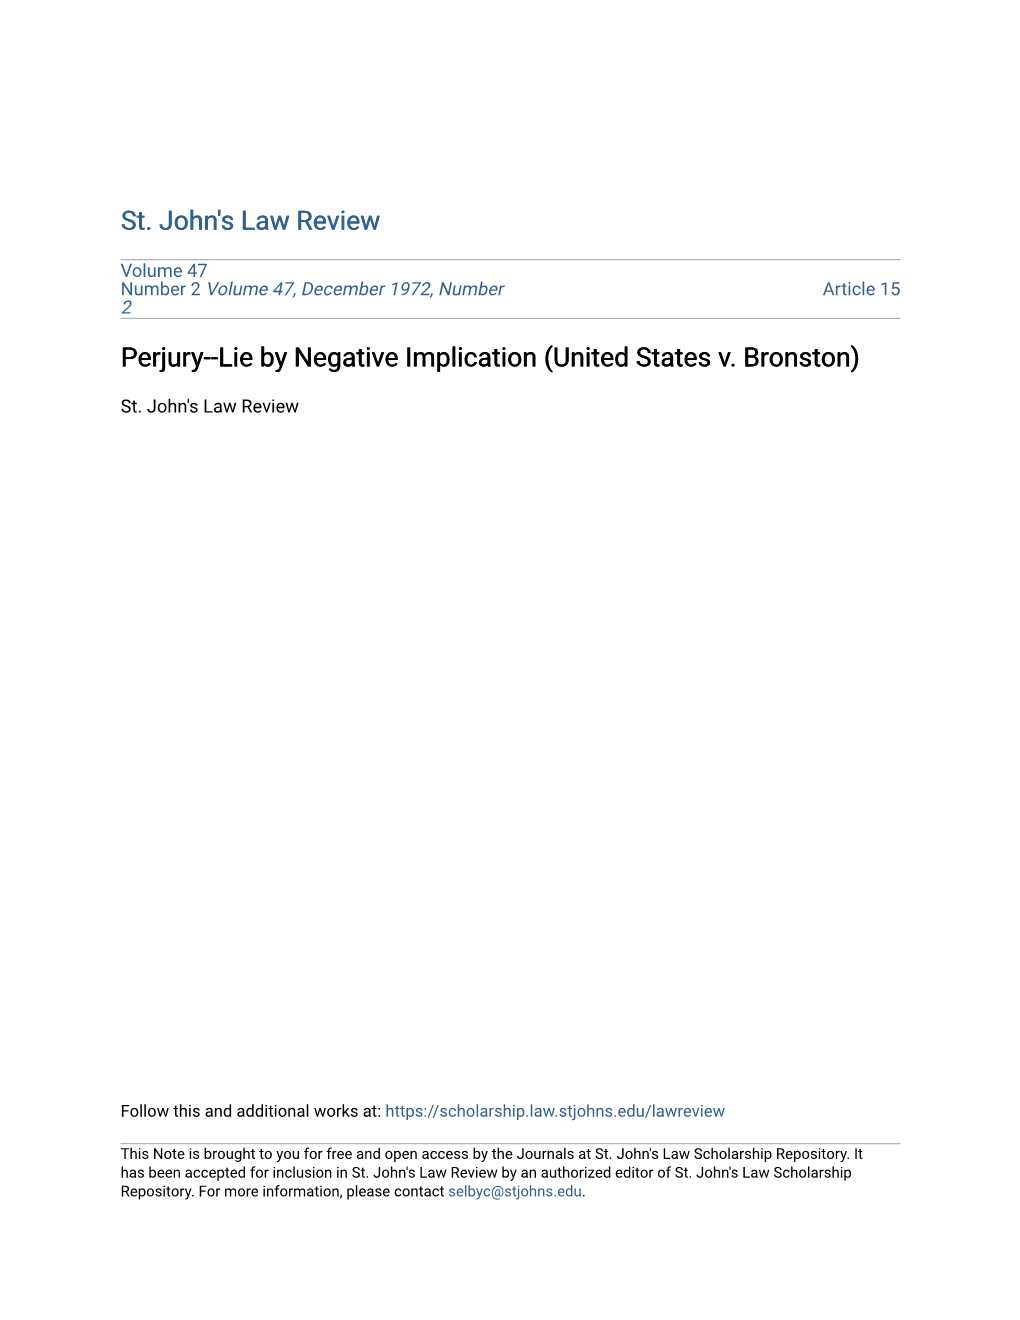 Perjury--Lie by Negative Implication (United States V. Bronston)